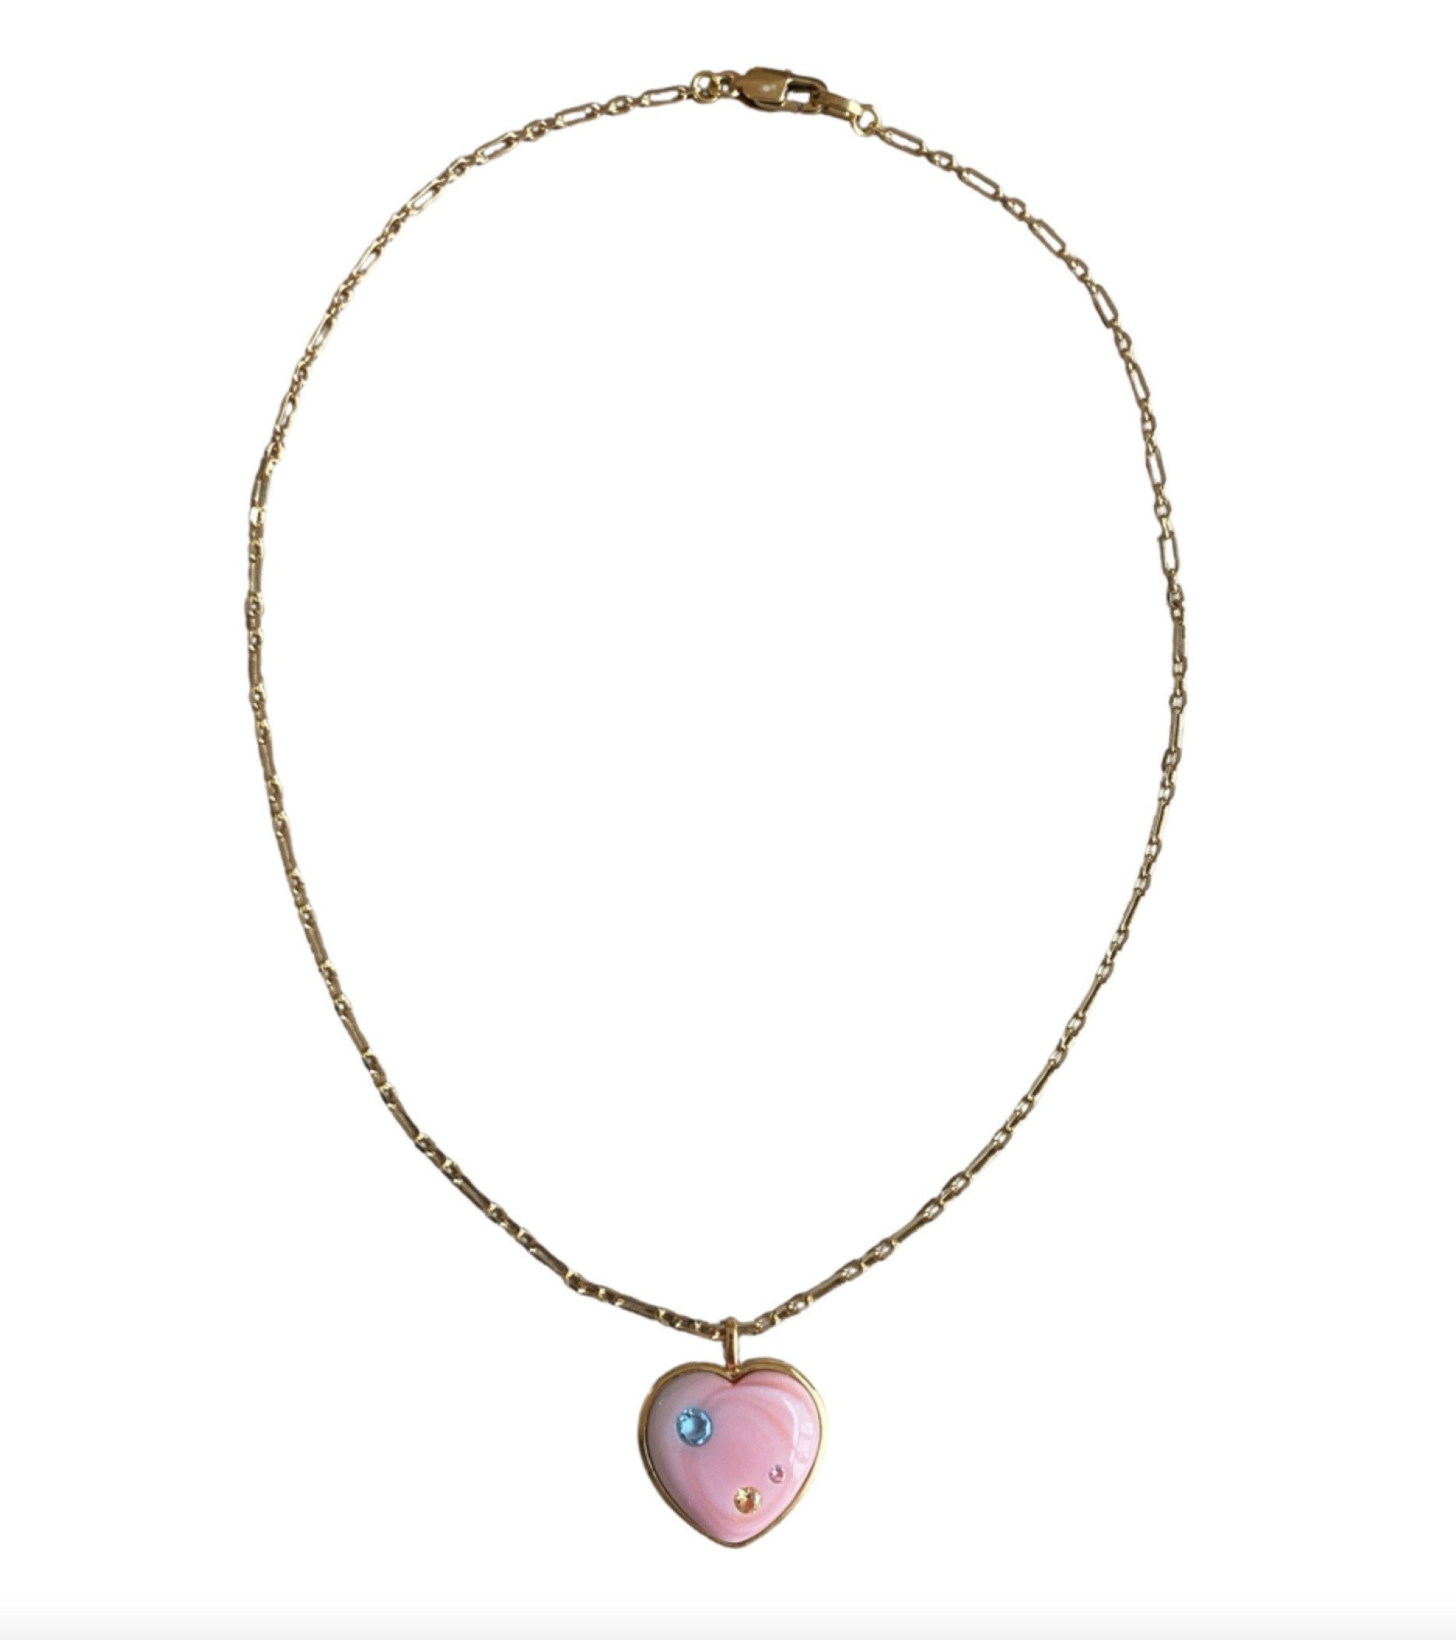 Black Pink Cord Crystal Pendant Necklace Statement Costume Gift Women Girls UK